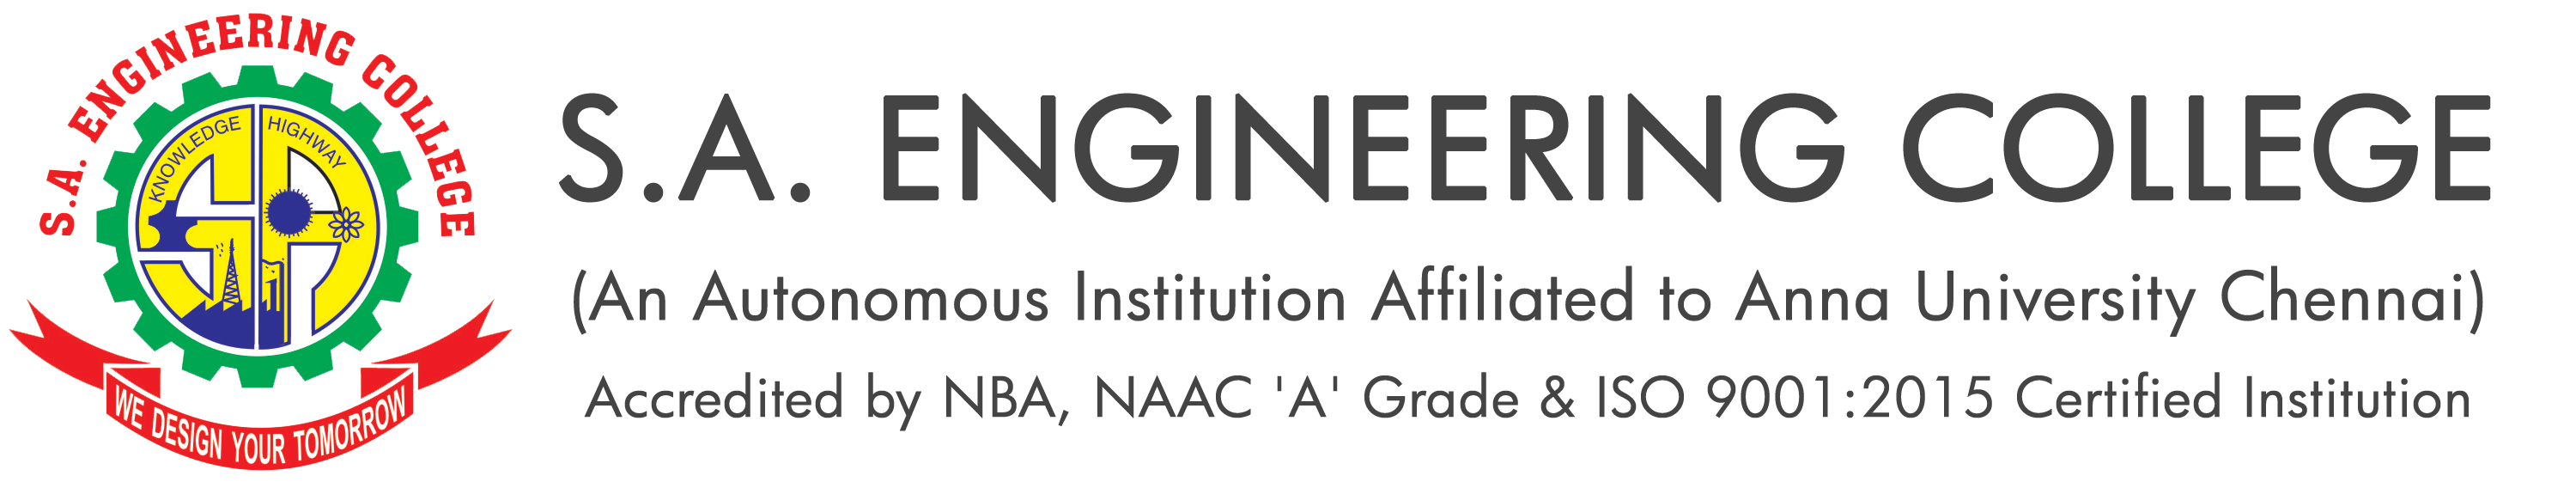 SAEC | S.A. Engineering College (Autonomous)